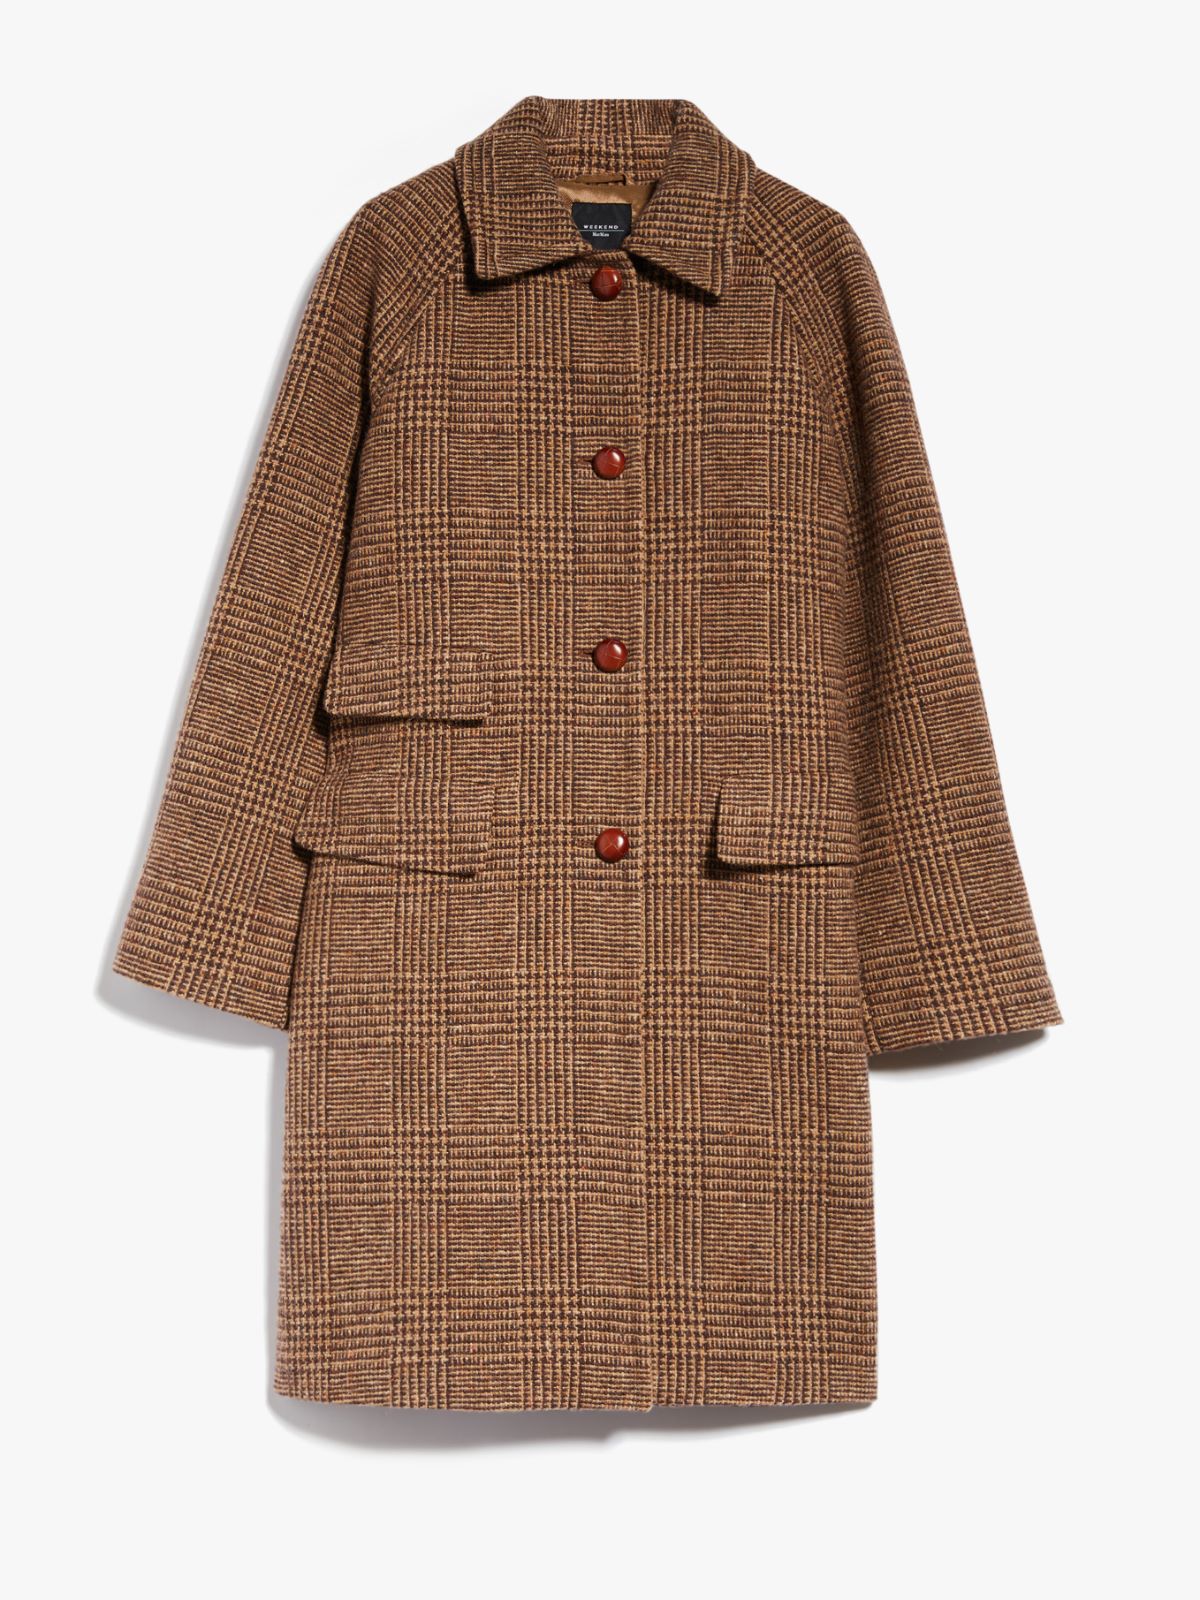 Wool tweed coat - HAZELNUT BROWN - Weekend Max Mara - 5